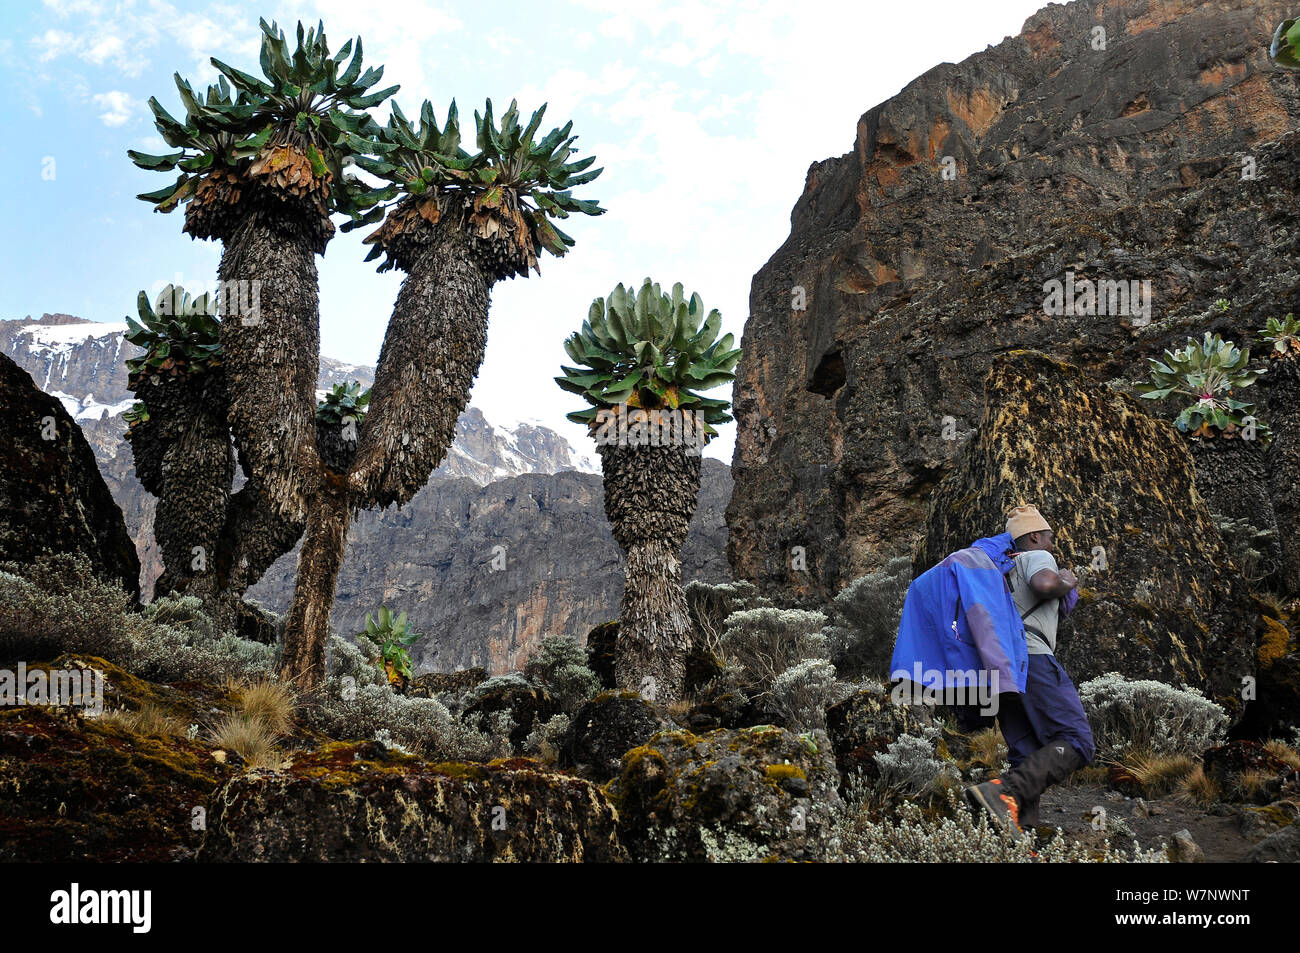 Porters walking amongst endemic Giant groundsel (Dendrosenecio sp) plants on higher slopes of Mount Kilimanjaro, Tanzania Stock Photo